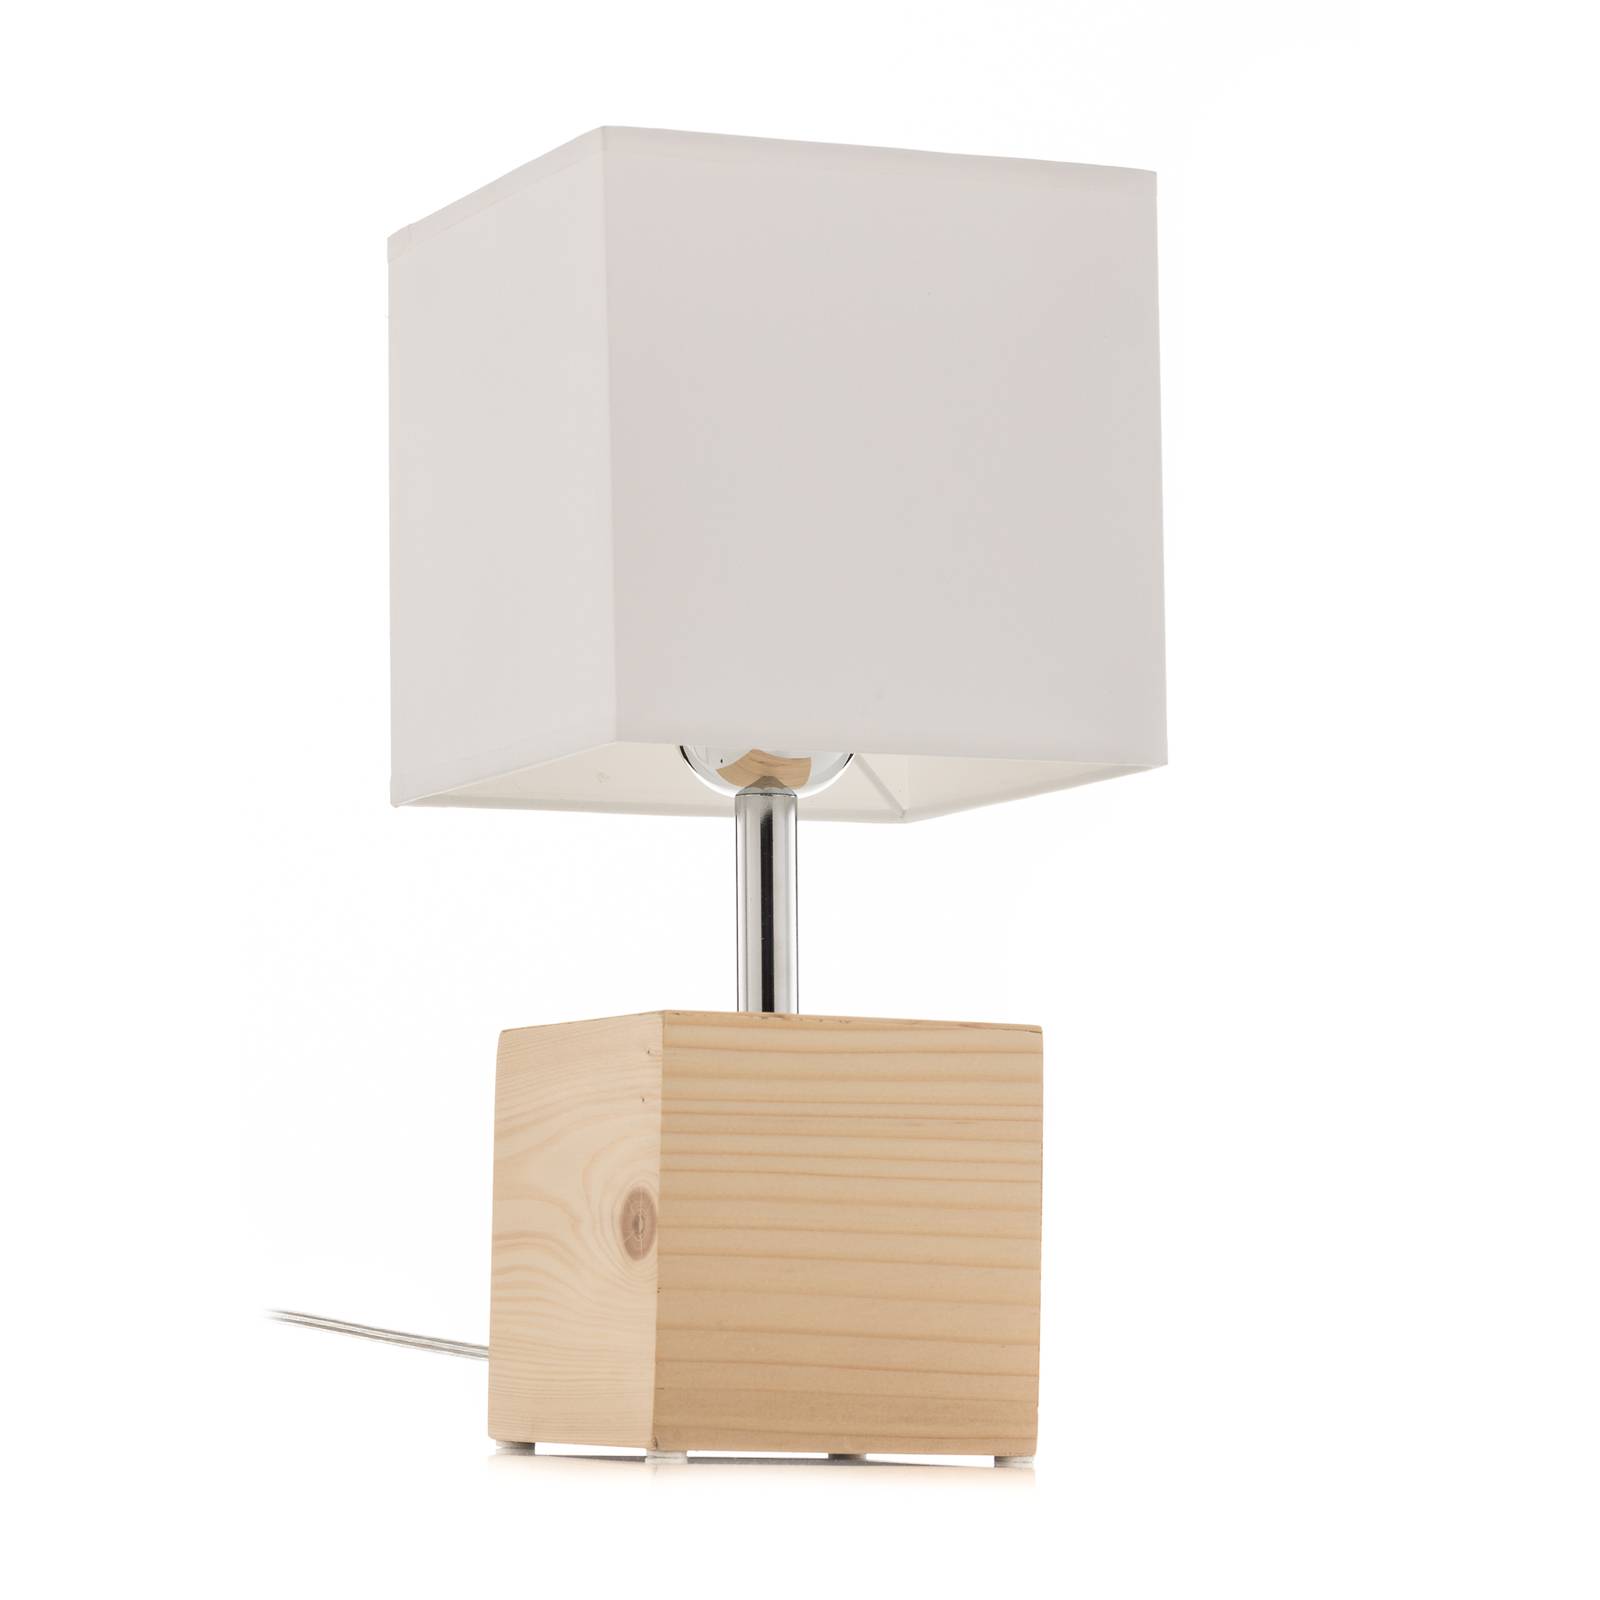 Faxa asztali lámpa, kocka alakú, natúr/fehér